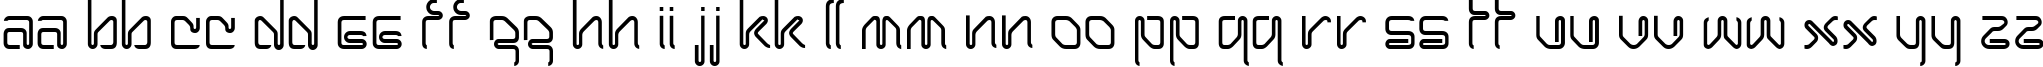 Пример написания английского алфавита шрифтом Harpoon